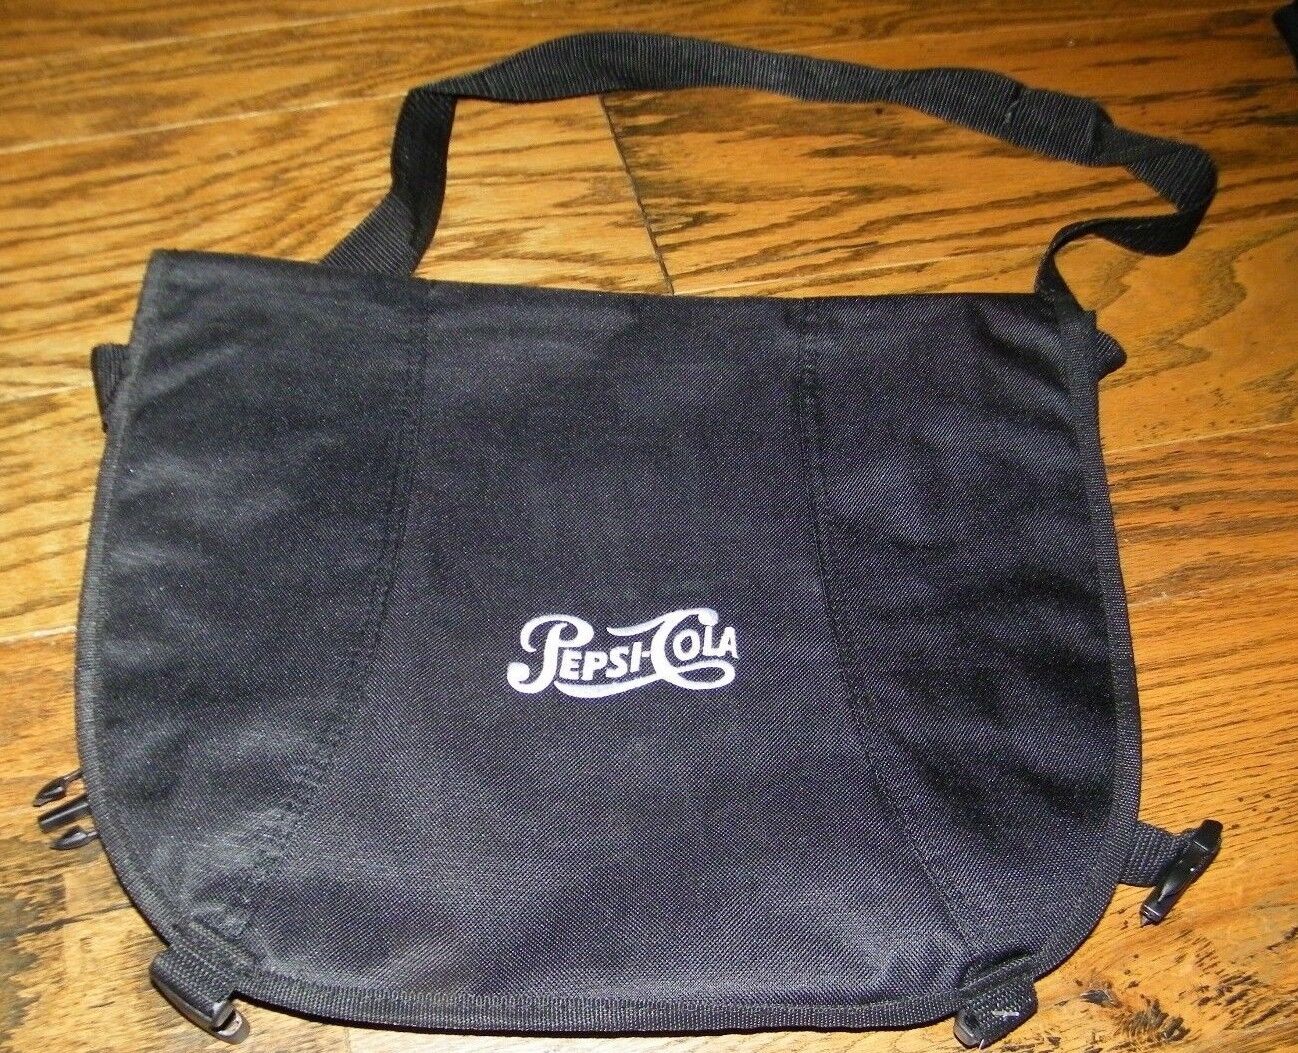 Pepsico Messenger Bag Laptop Bag with handle and strap Travelwell NWT Pepsi cola